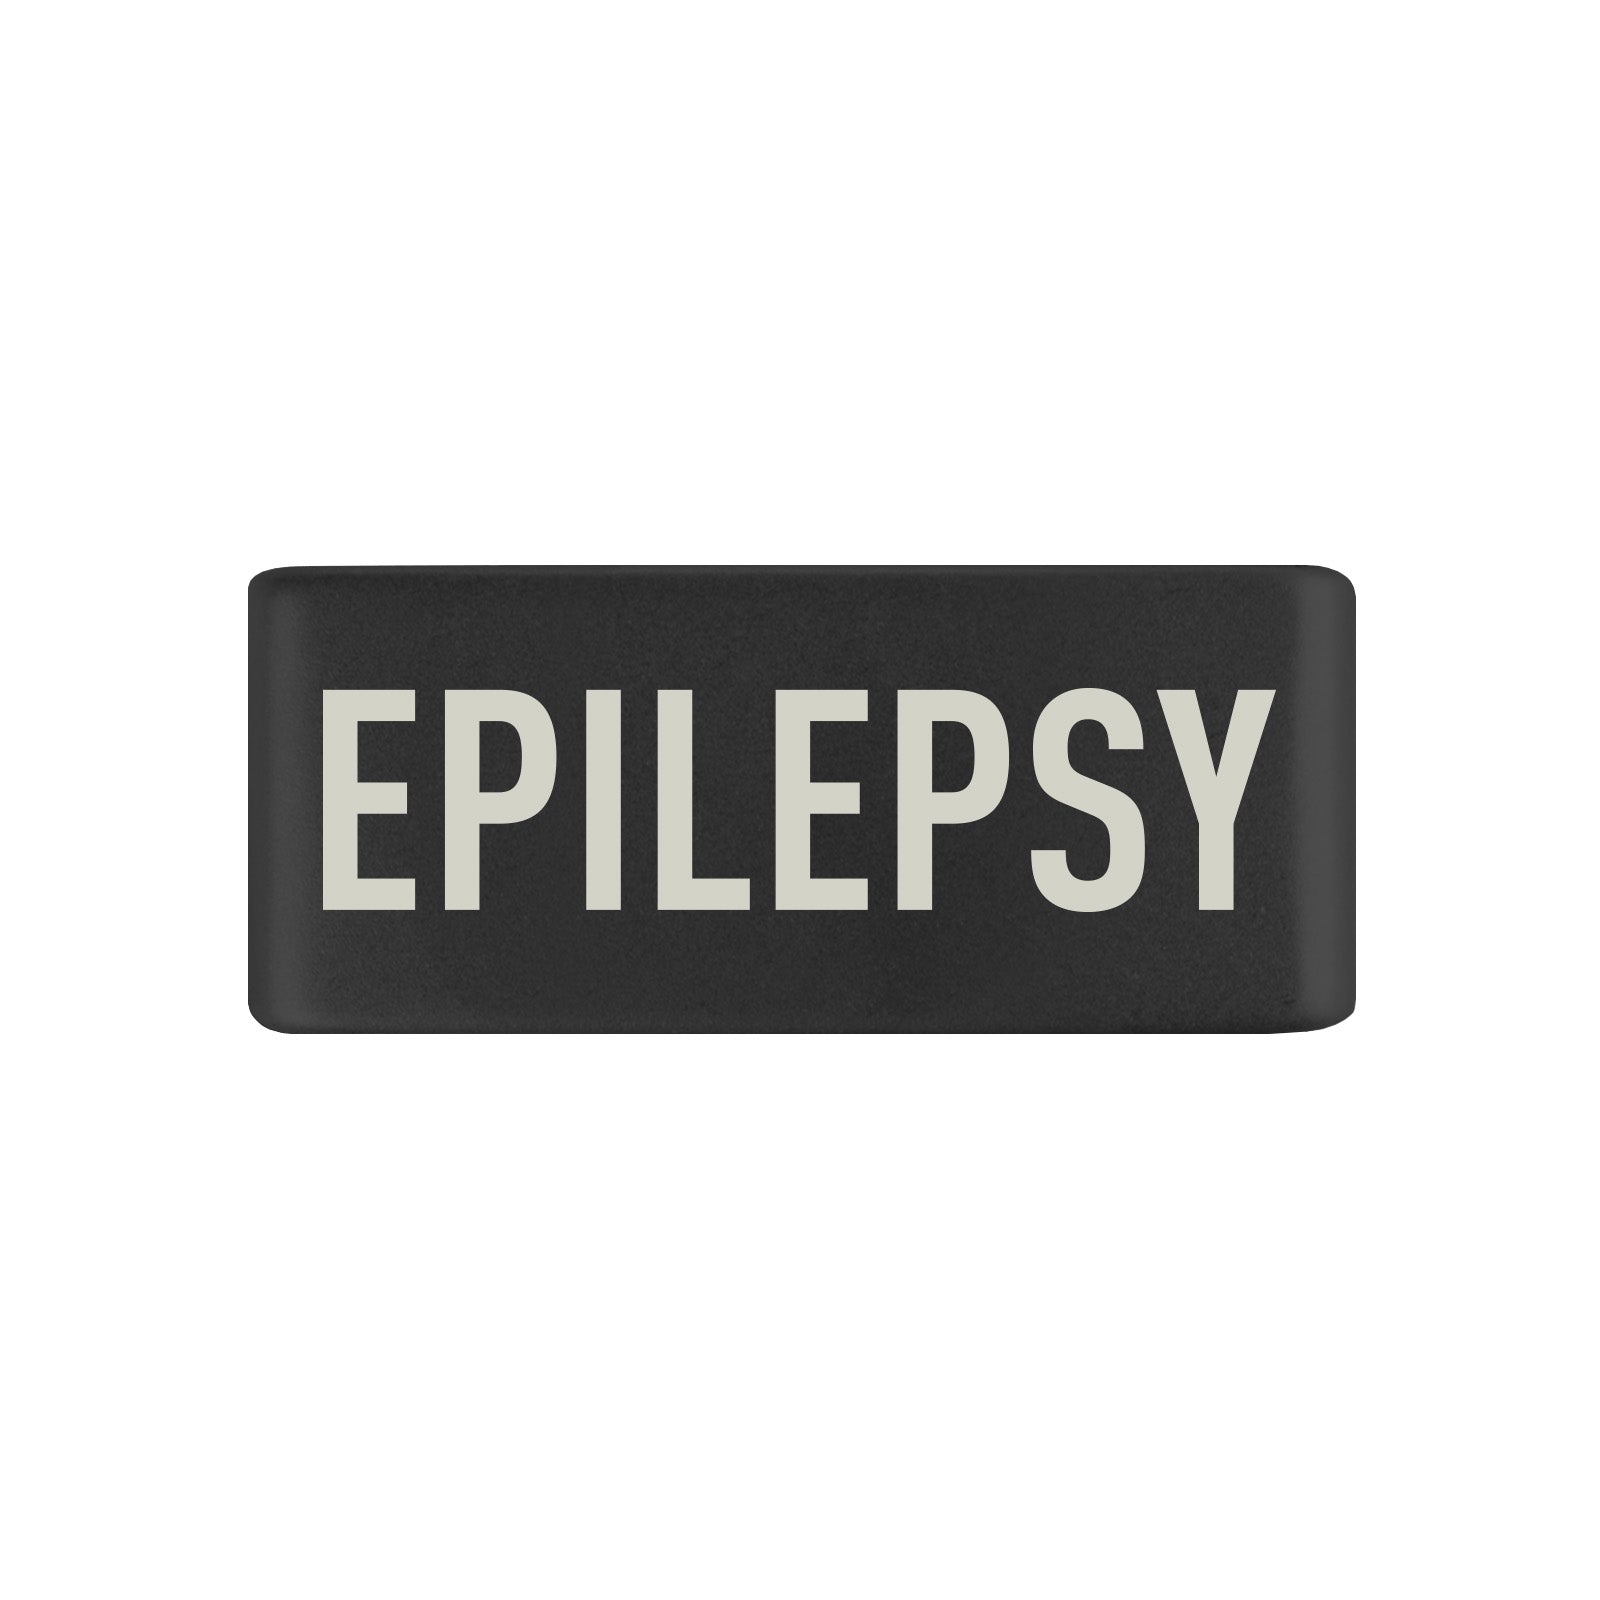 Epilepsy Badge Badge 13mm - ROAD iD